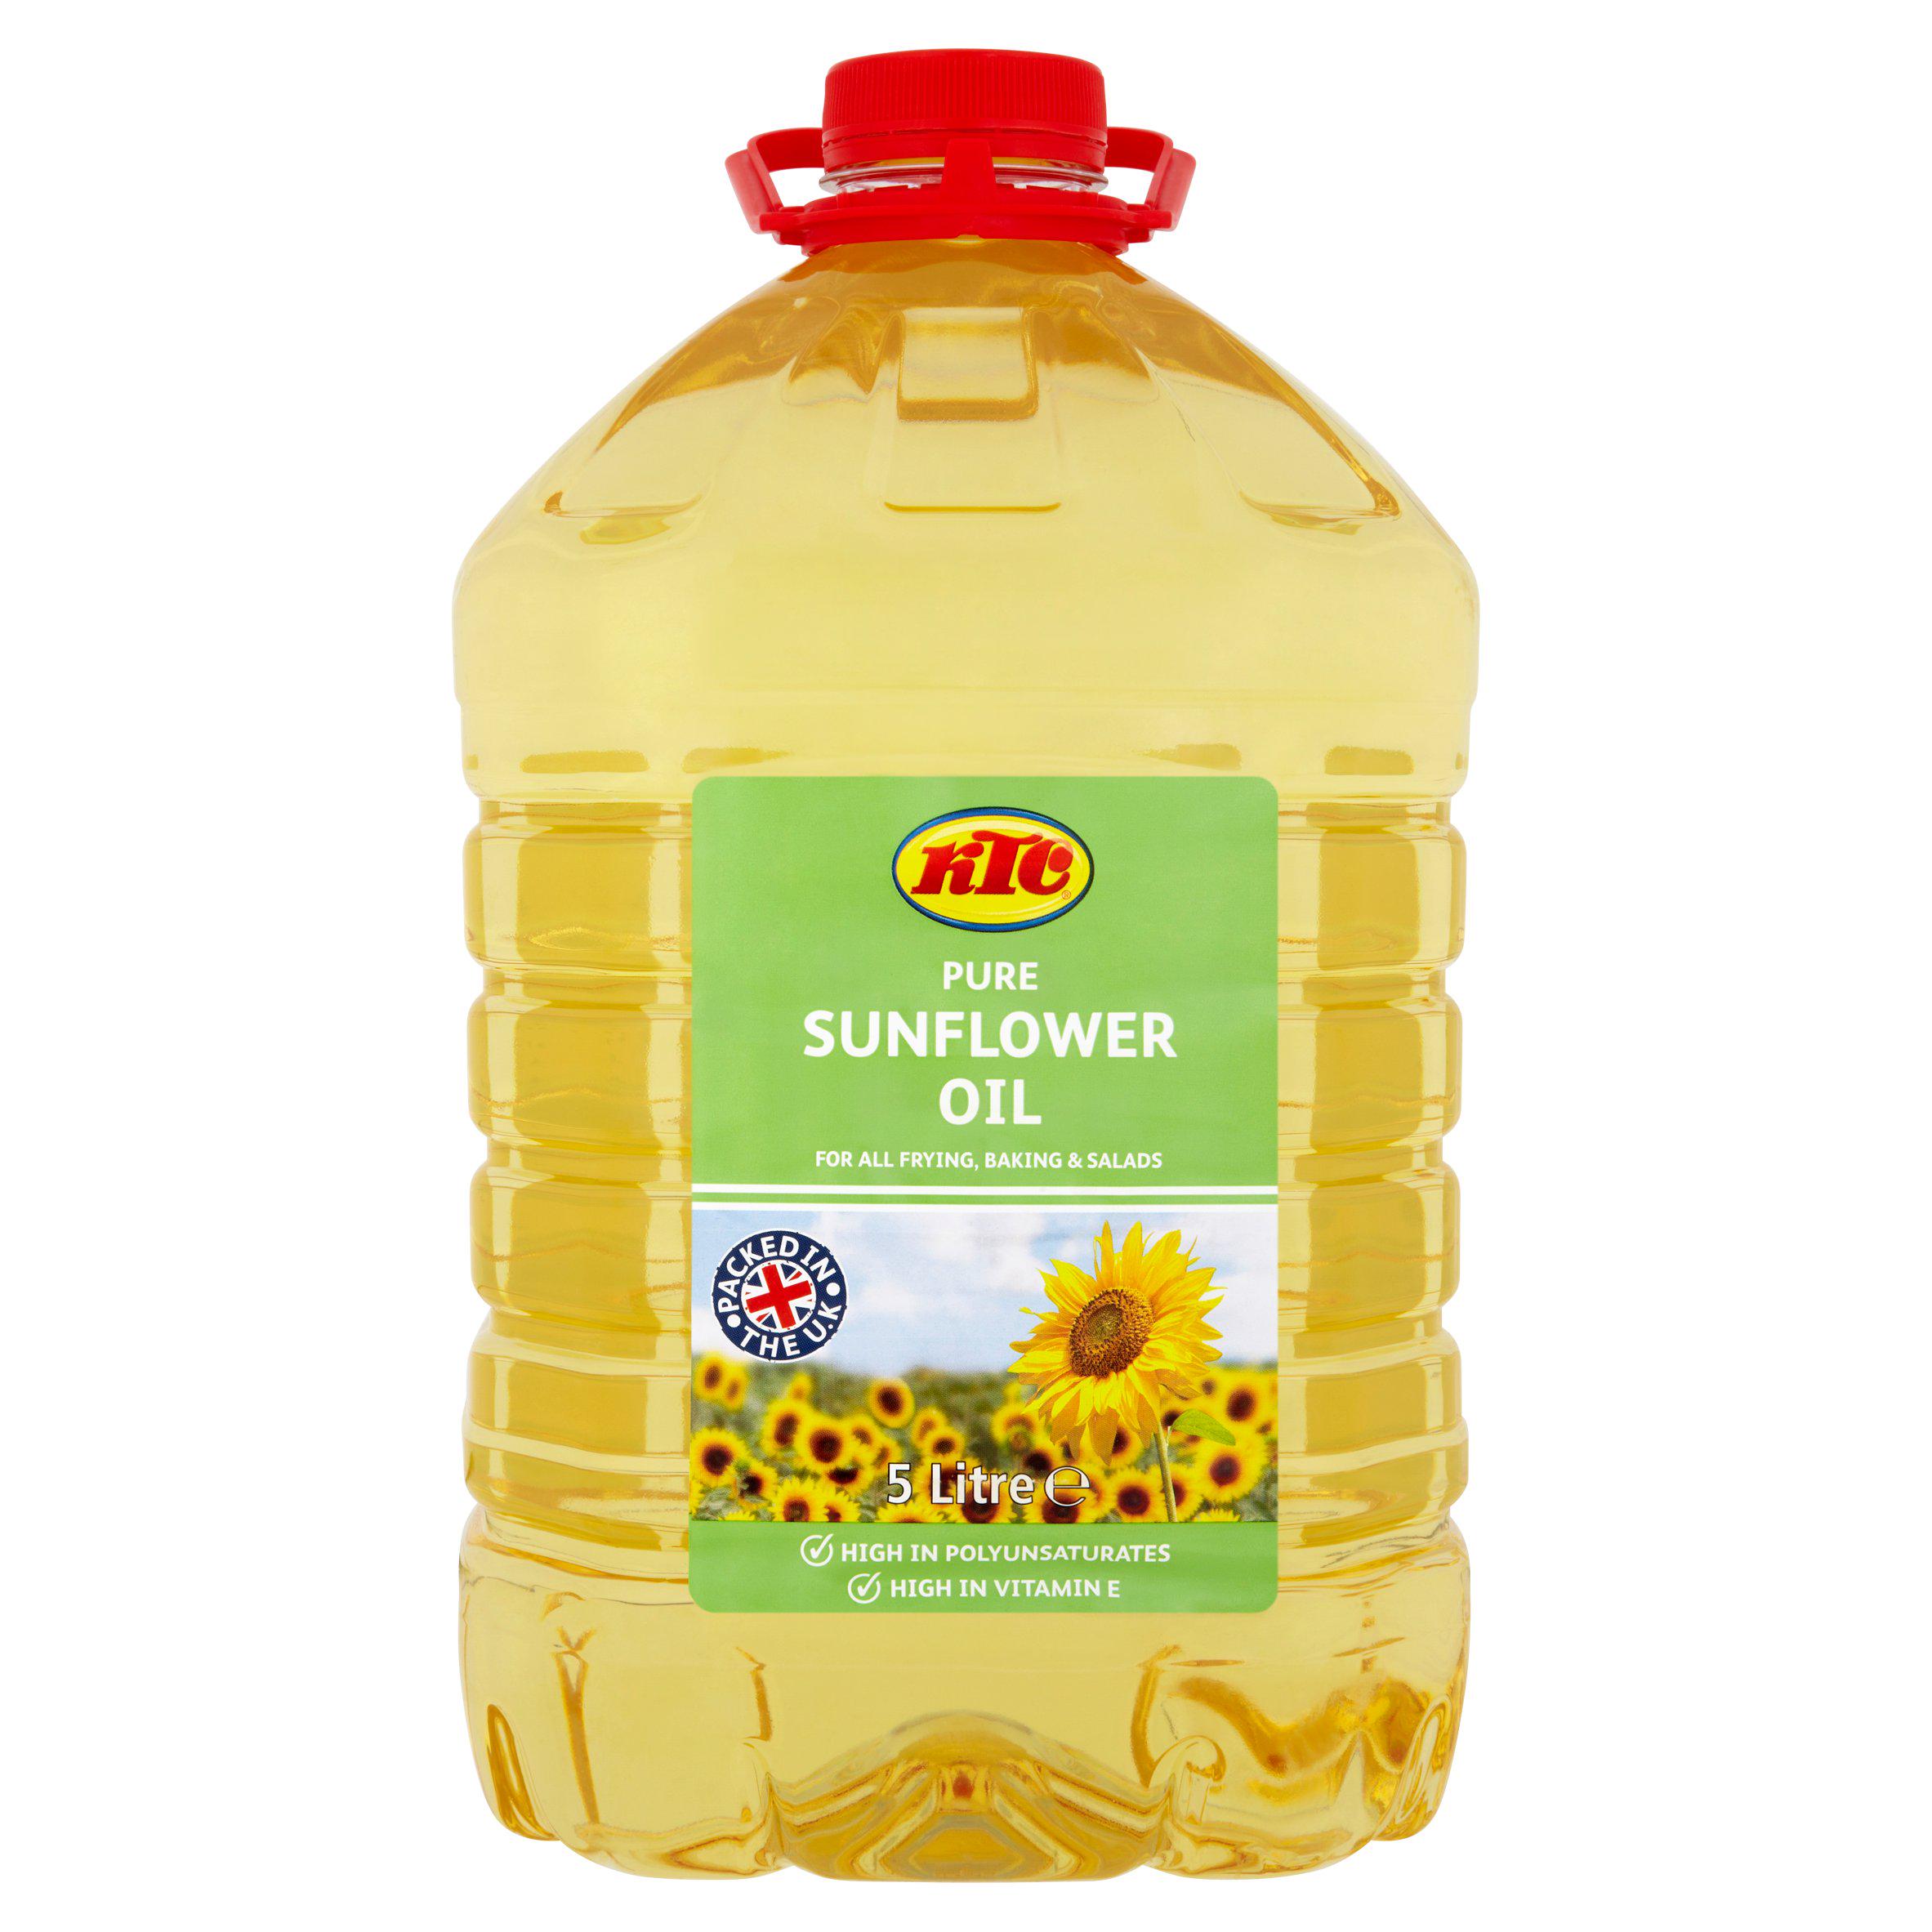 Ktc sunflower oil 5l